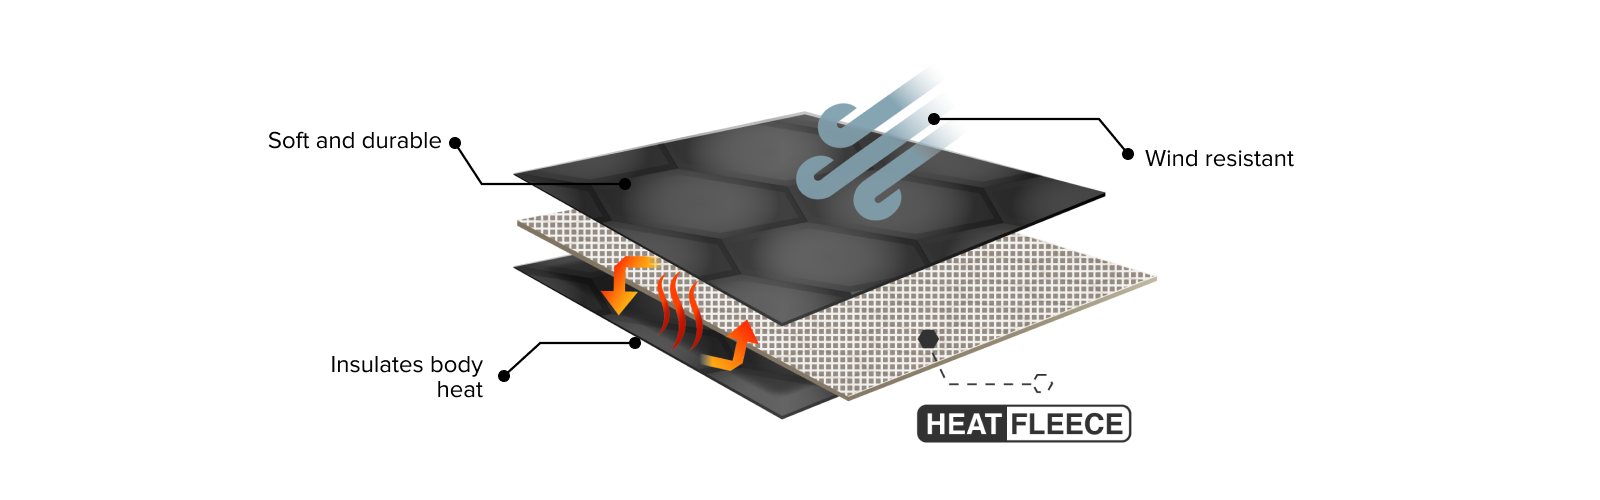 HeatFleece Technology